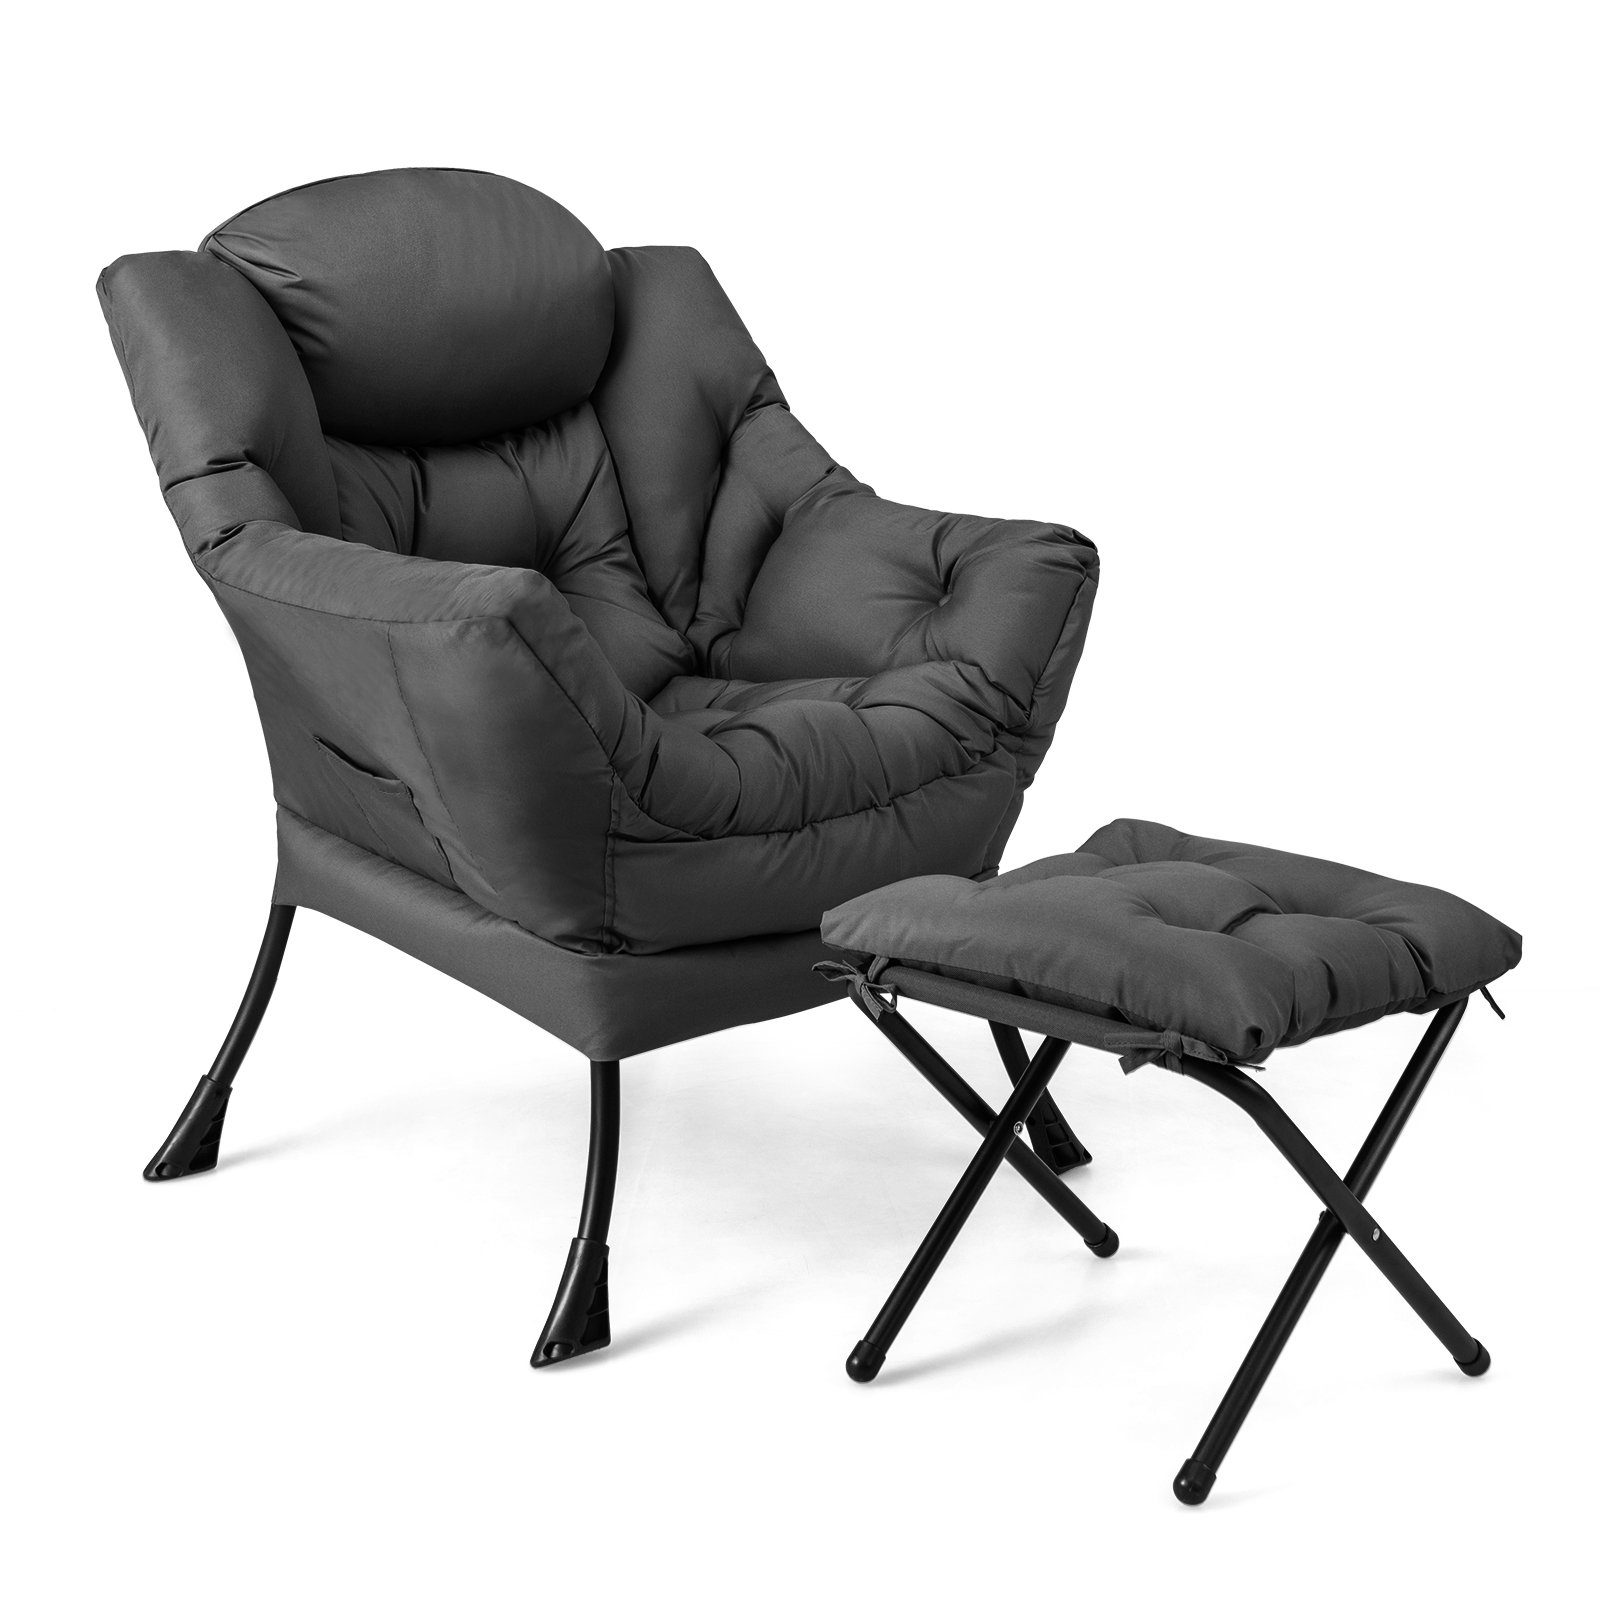 COSTWAY Relaxsessel Кресла mit Hocker, 150kg belastbar